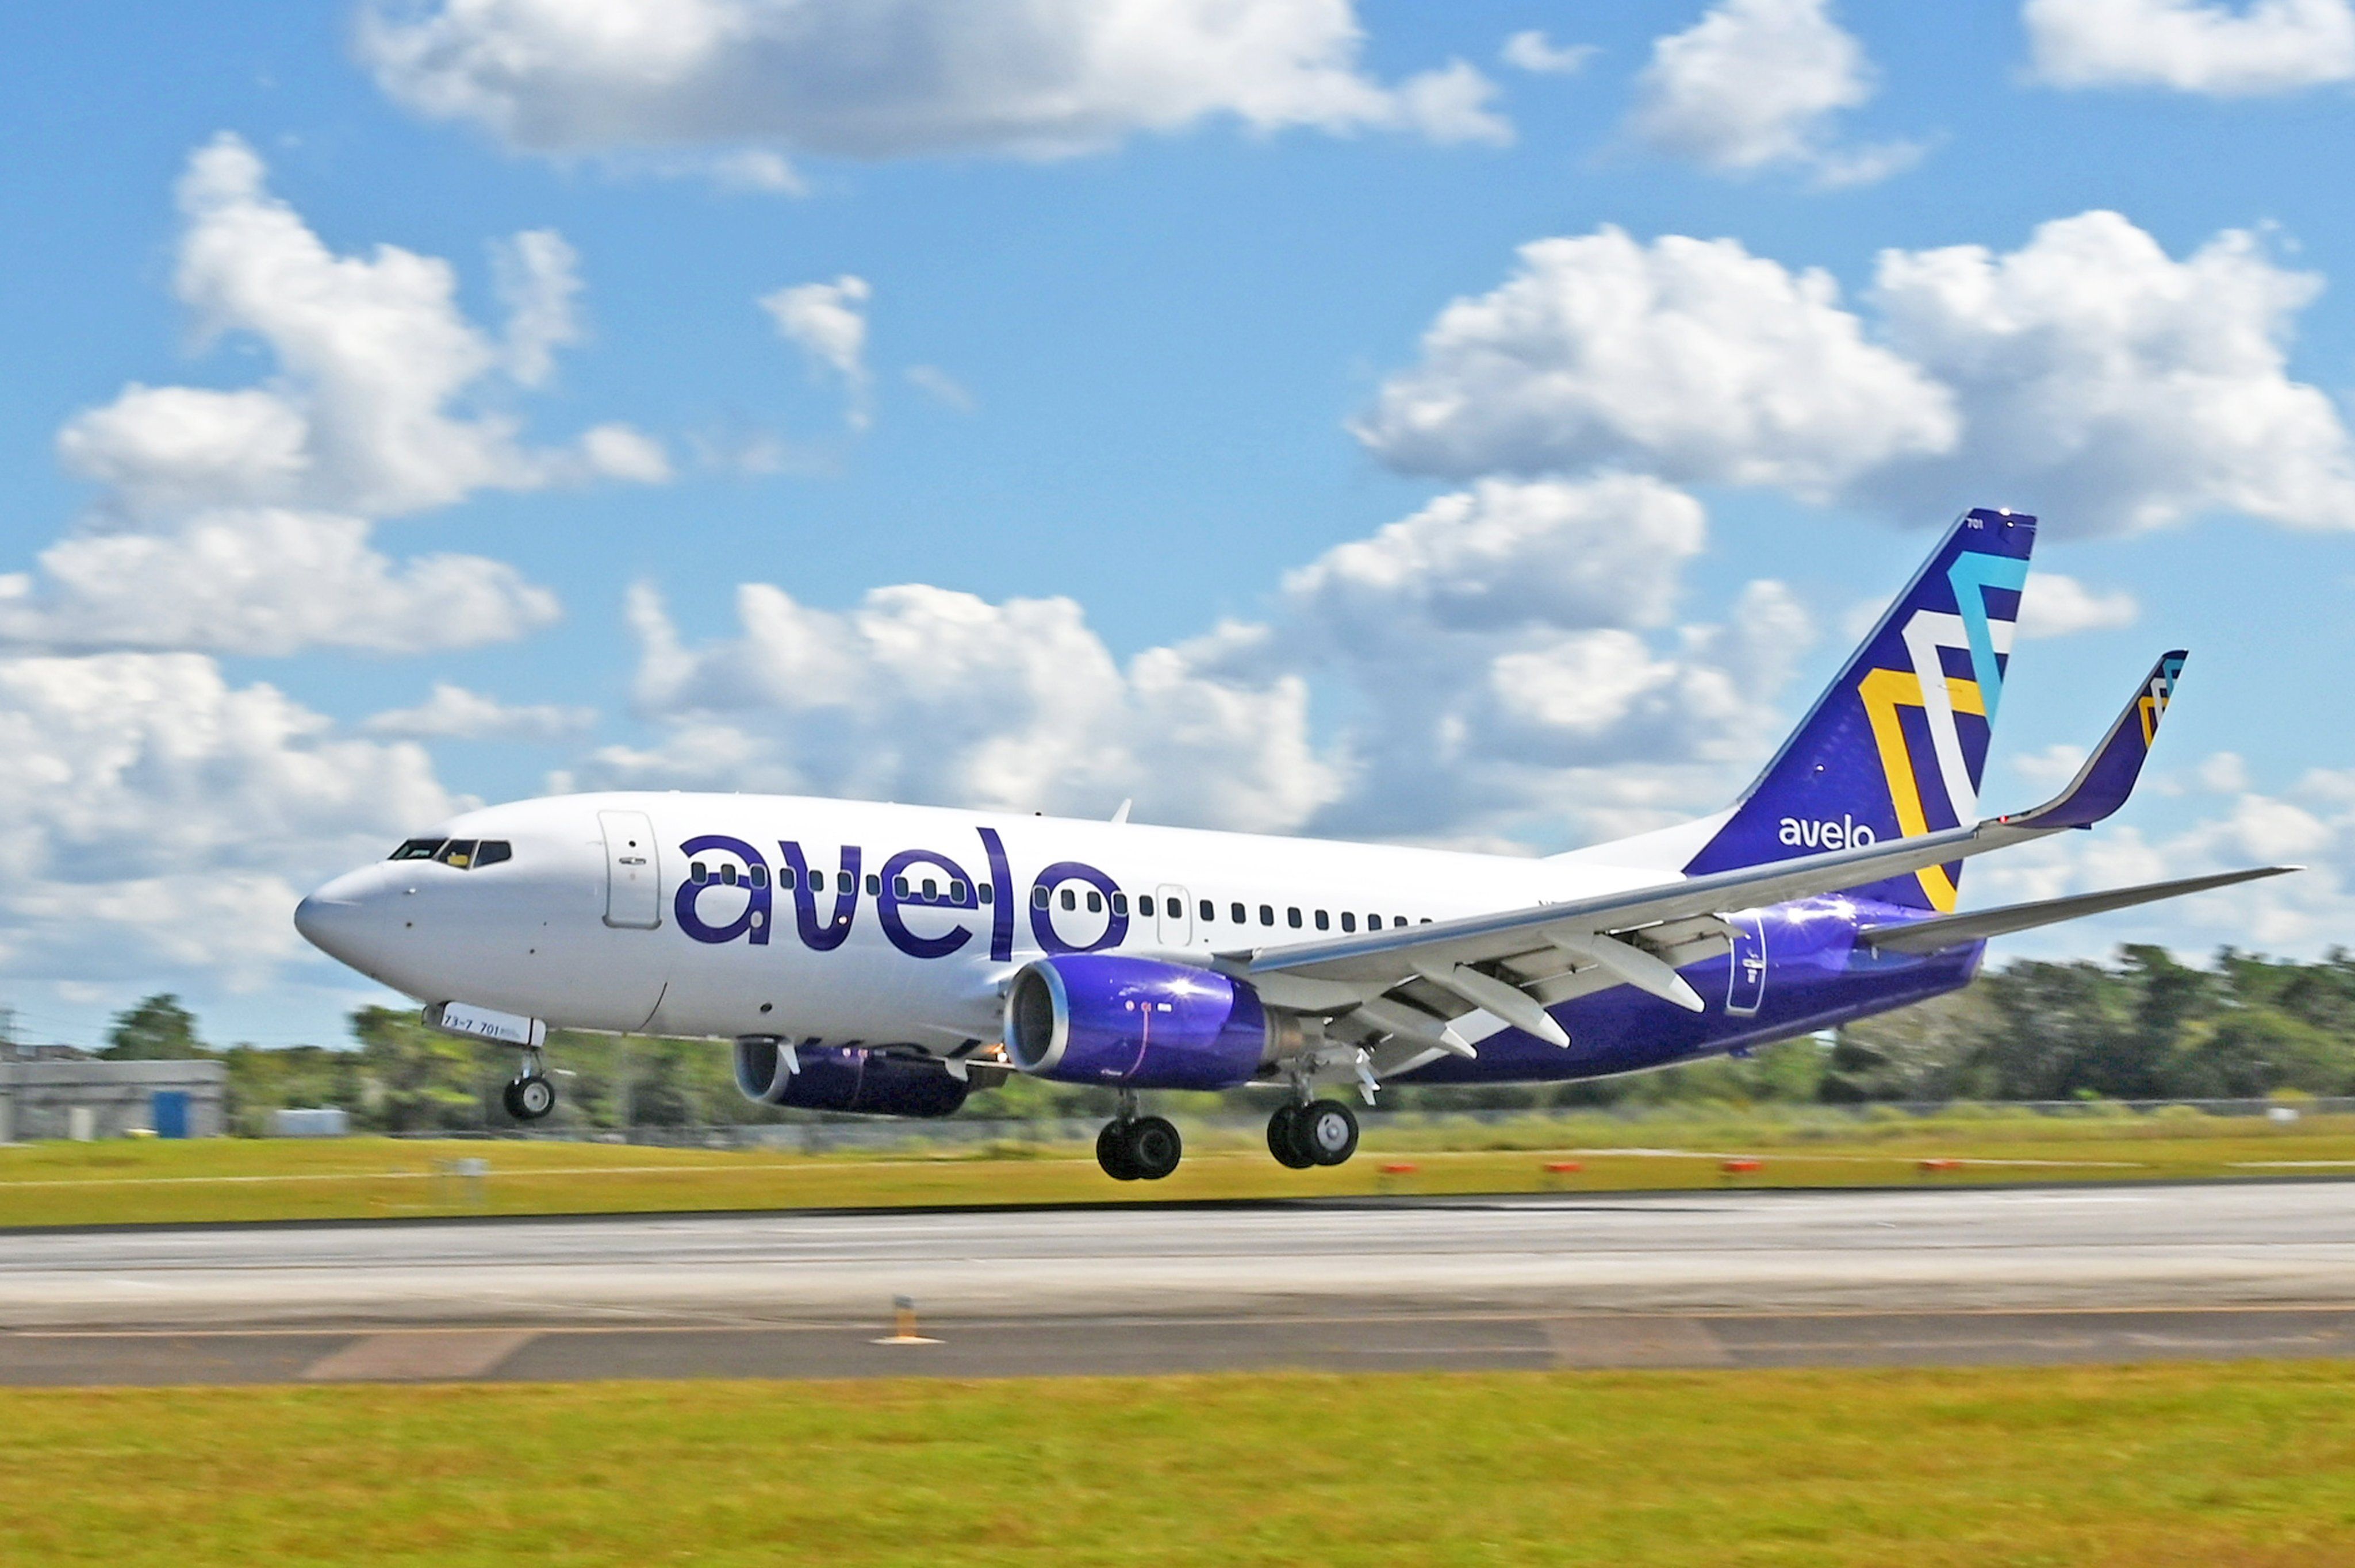 Avelo Airlines Boeing 737-700 landing at Orlando International Airport.